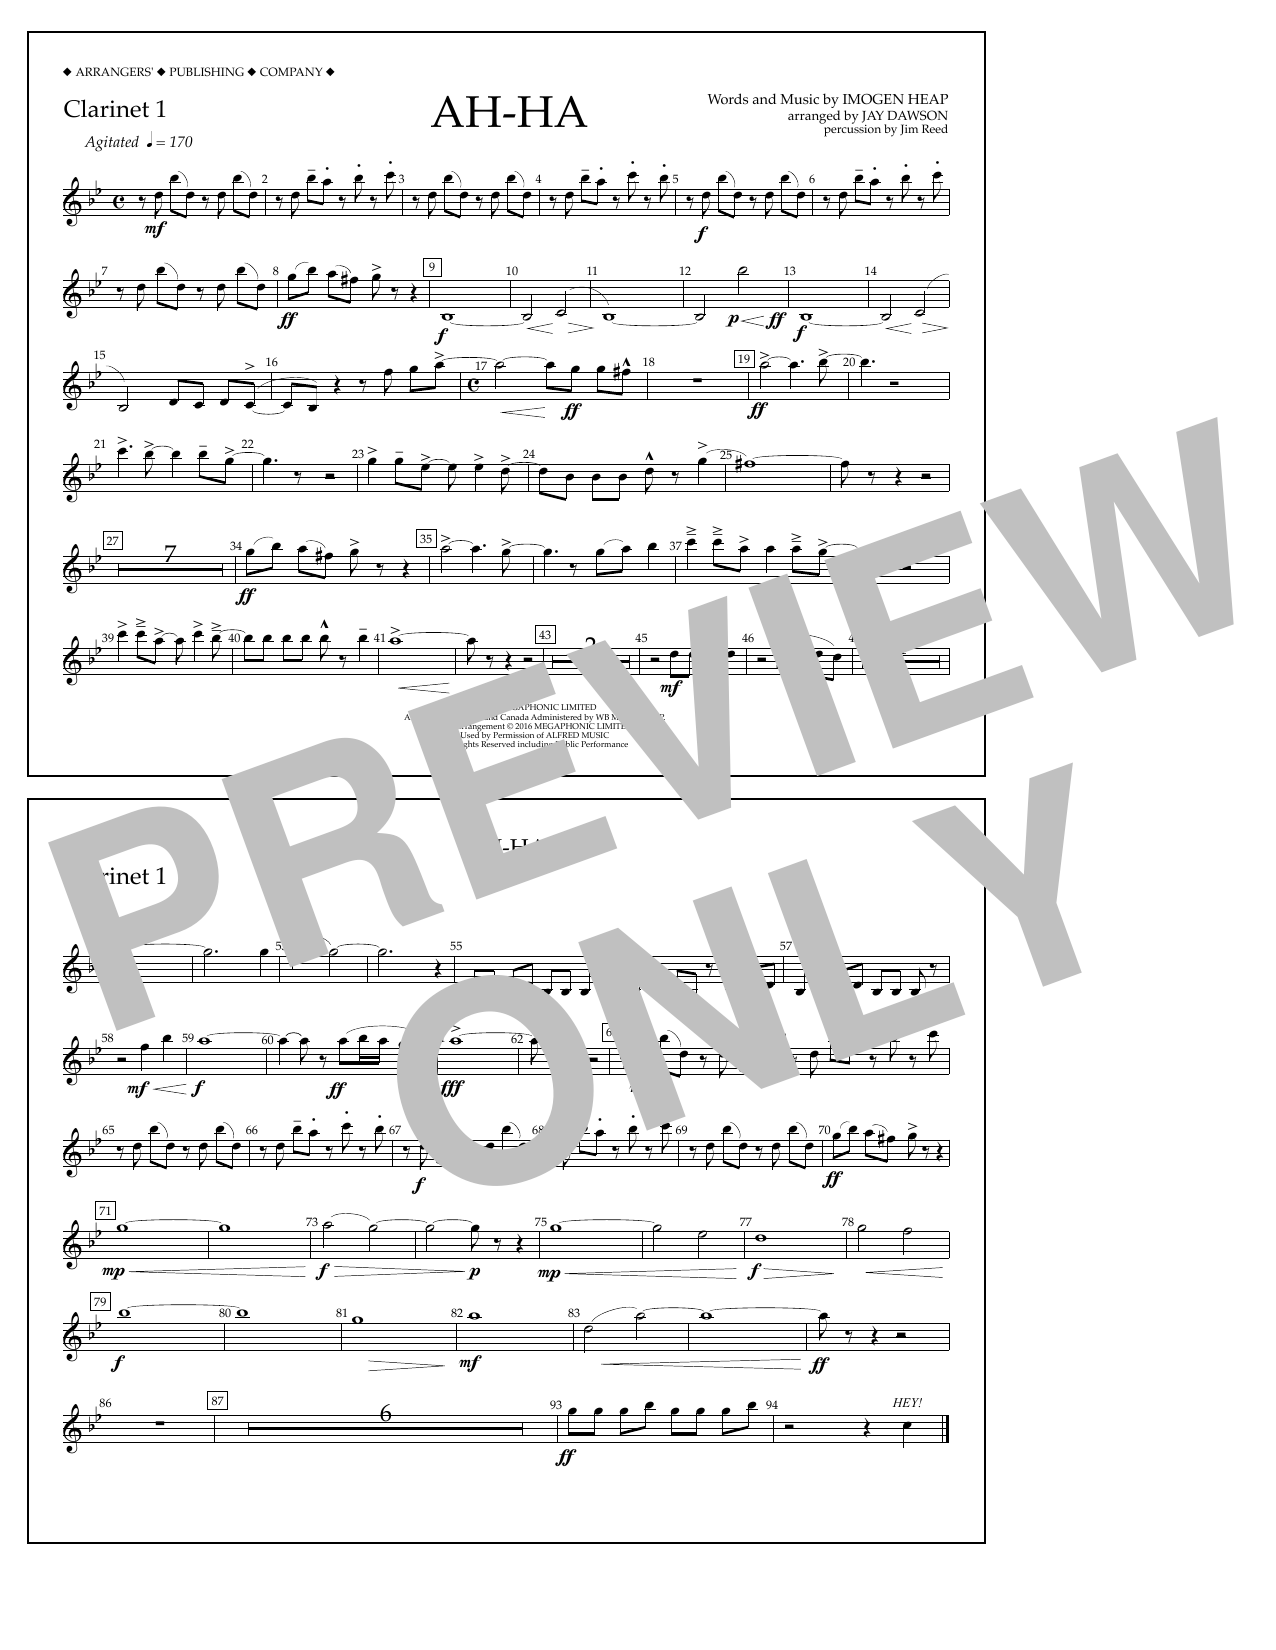 Jay Dawson Ah-ha - Clarinet 1 Sheet Music Notes & Chords for Marching Band - Download or Print PDF